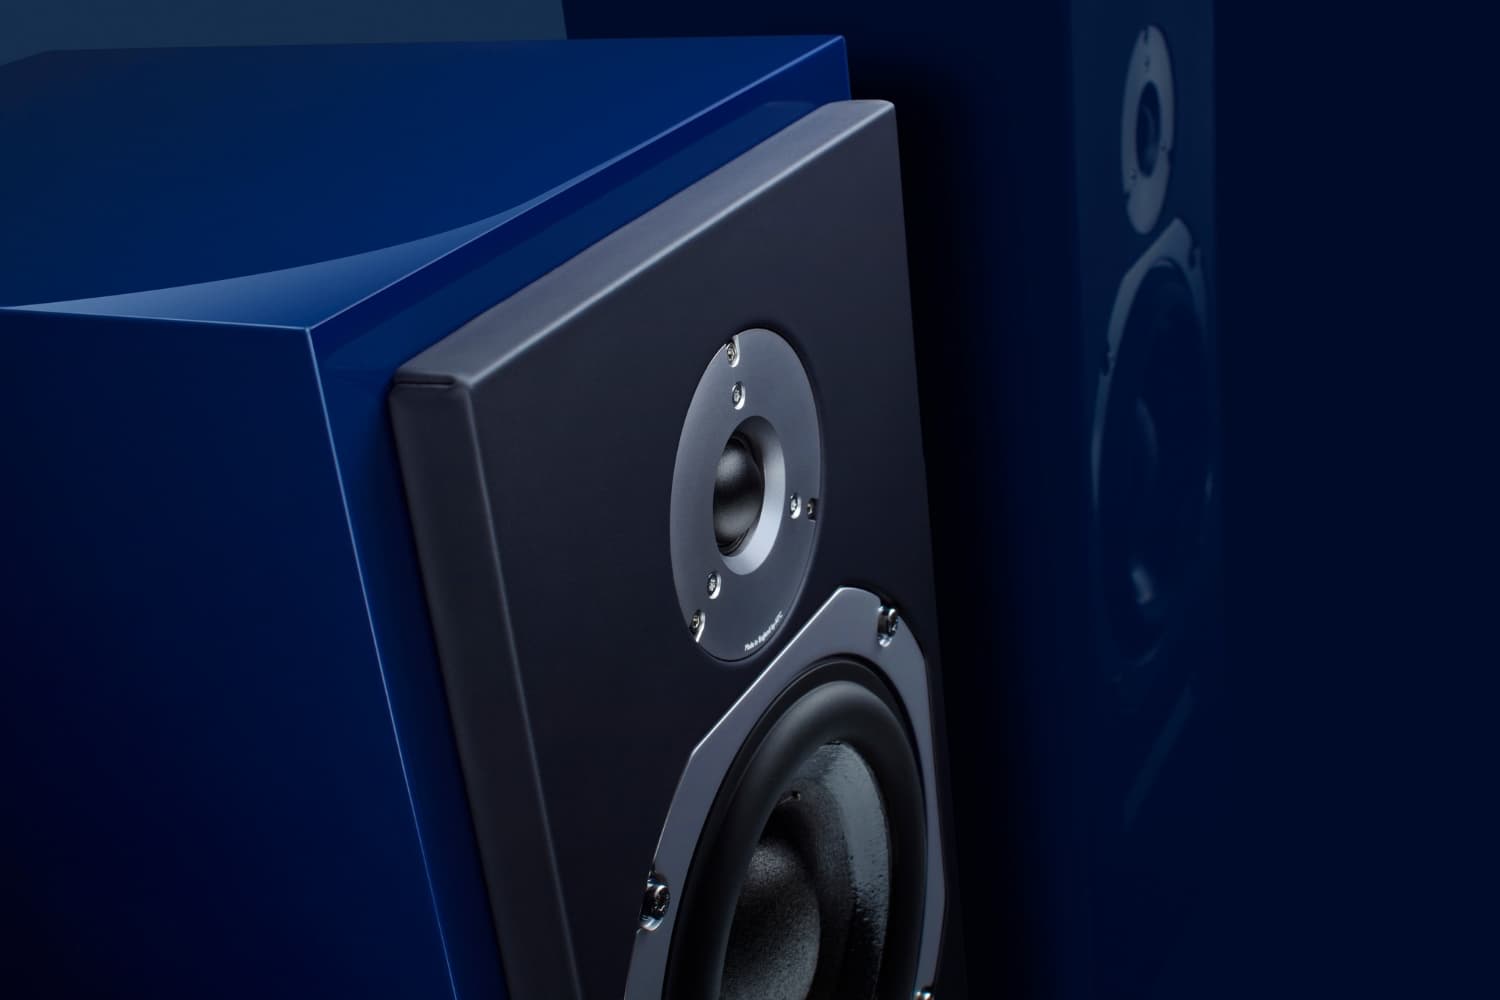 scm20asl limited edition standmount speakers atc iso closeup rear blue dreamaudio mediagrid b